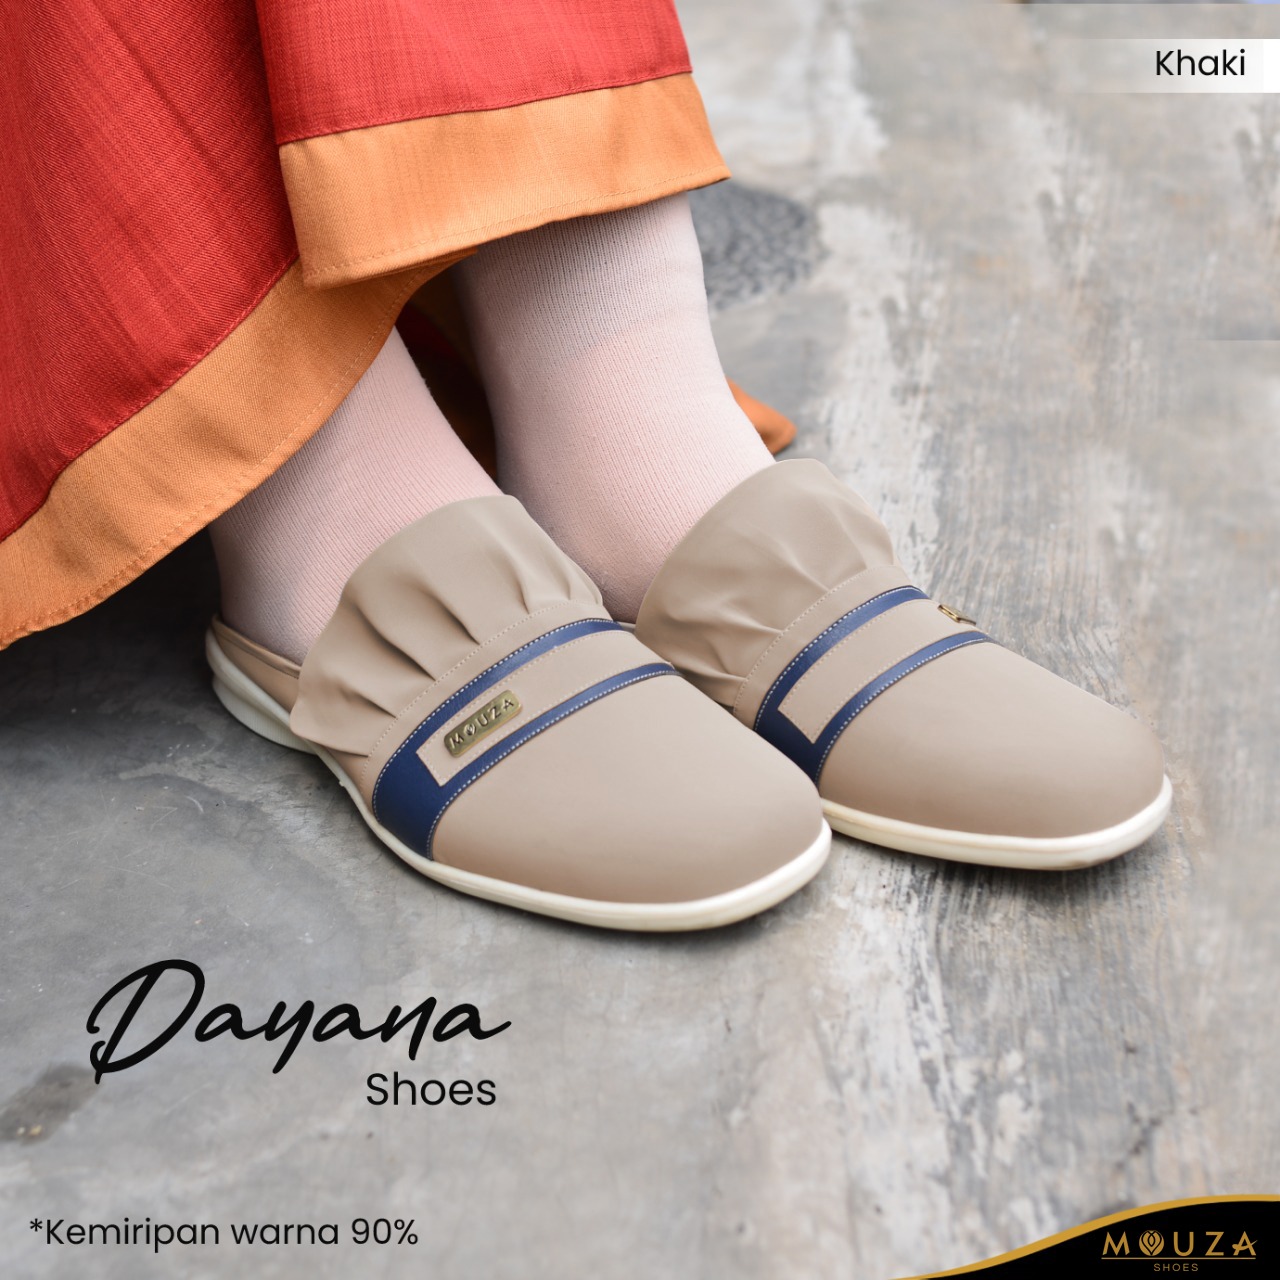 Dayana Shoes